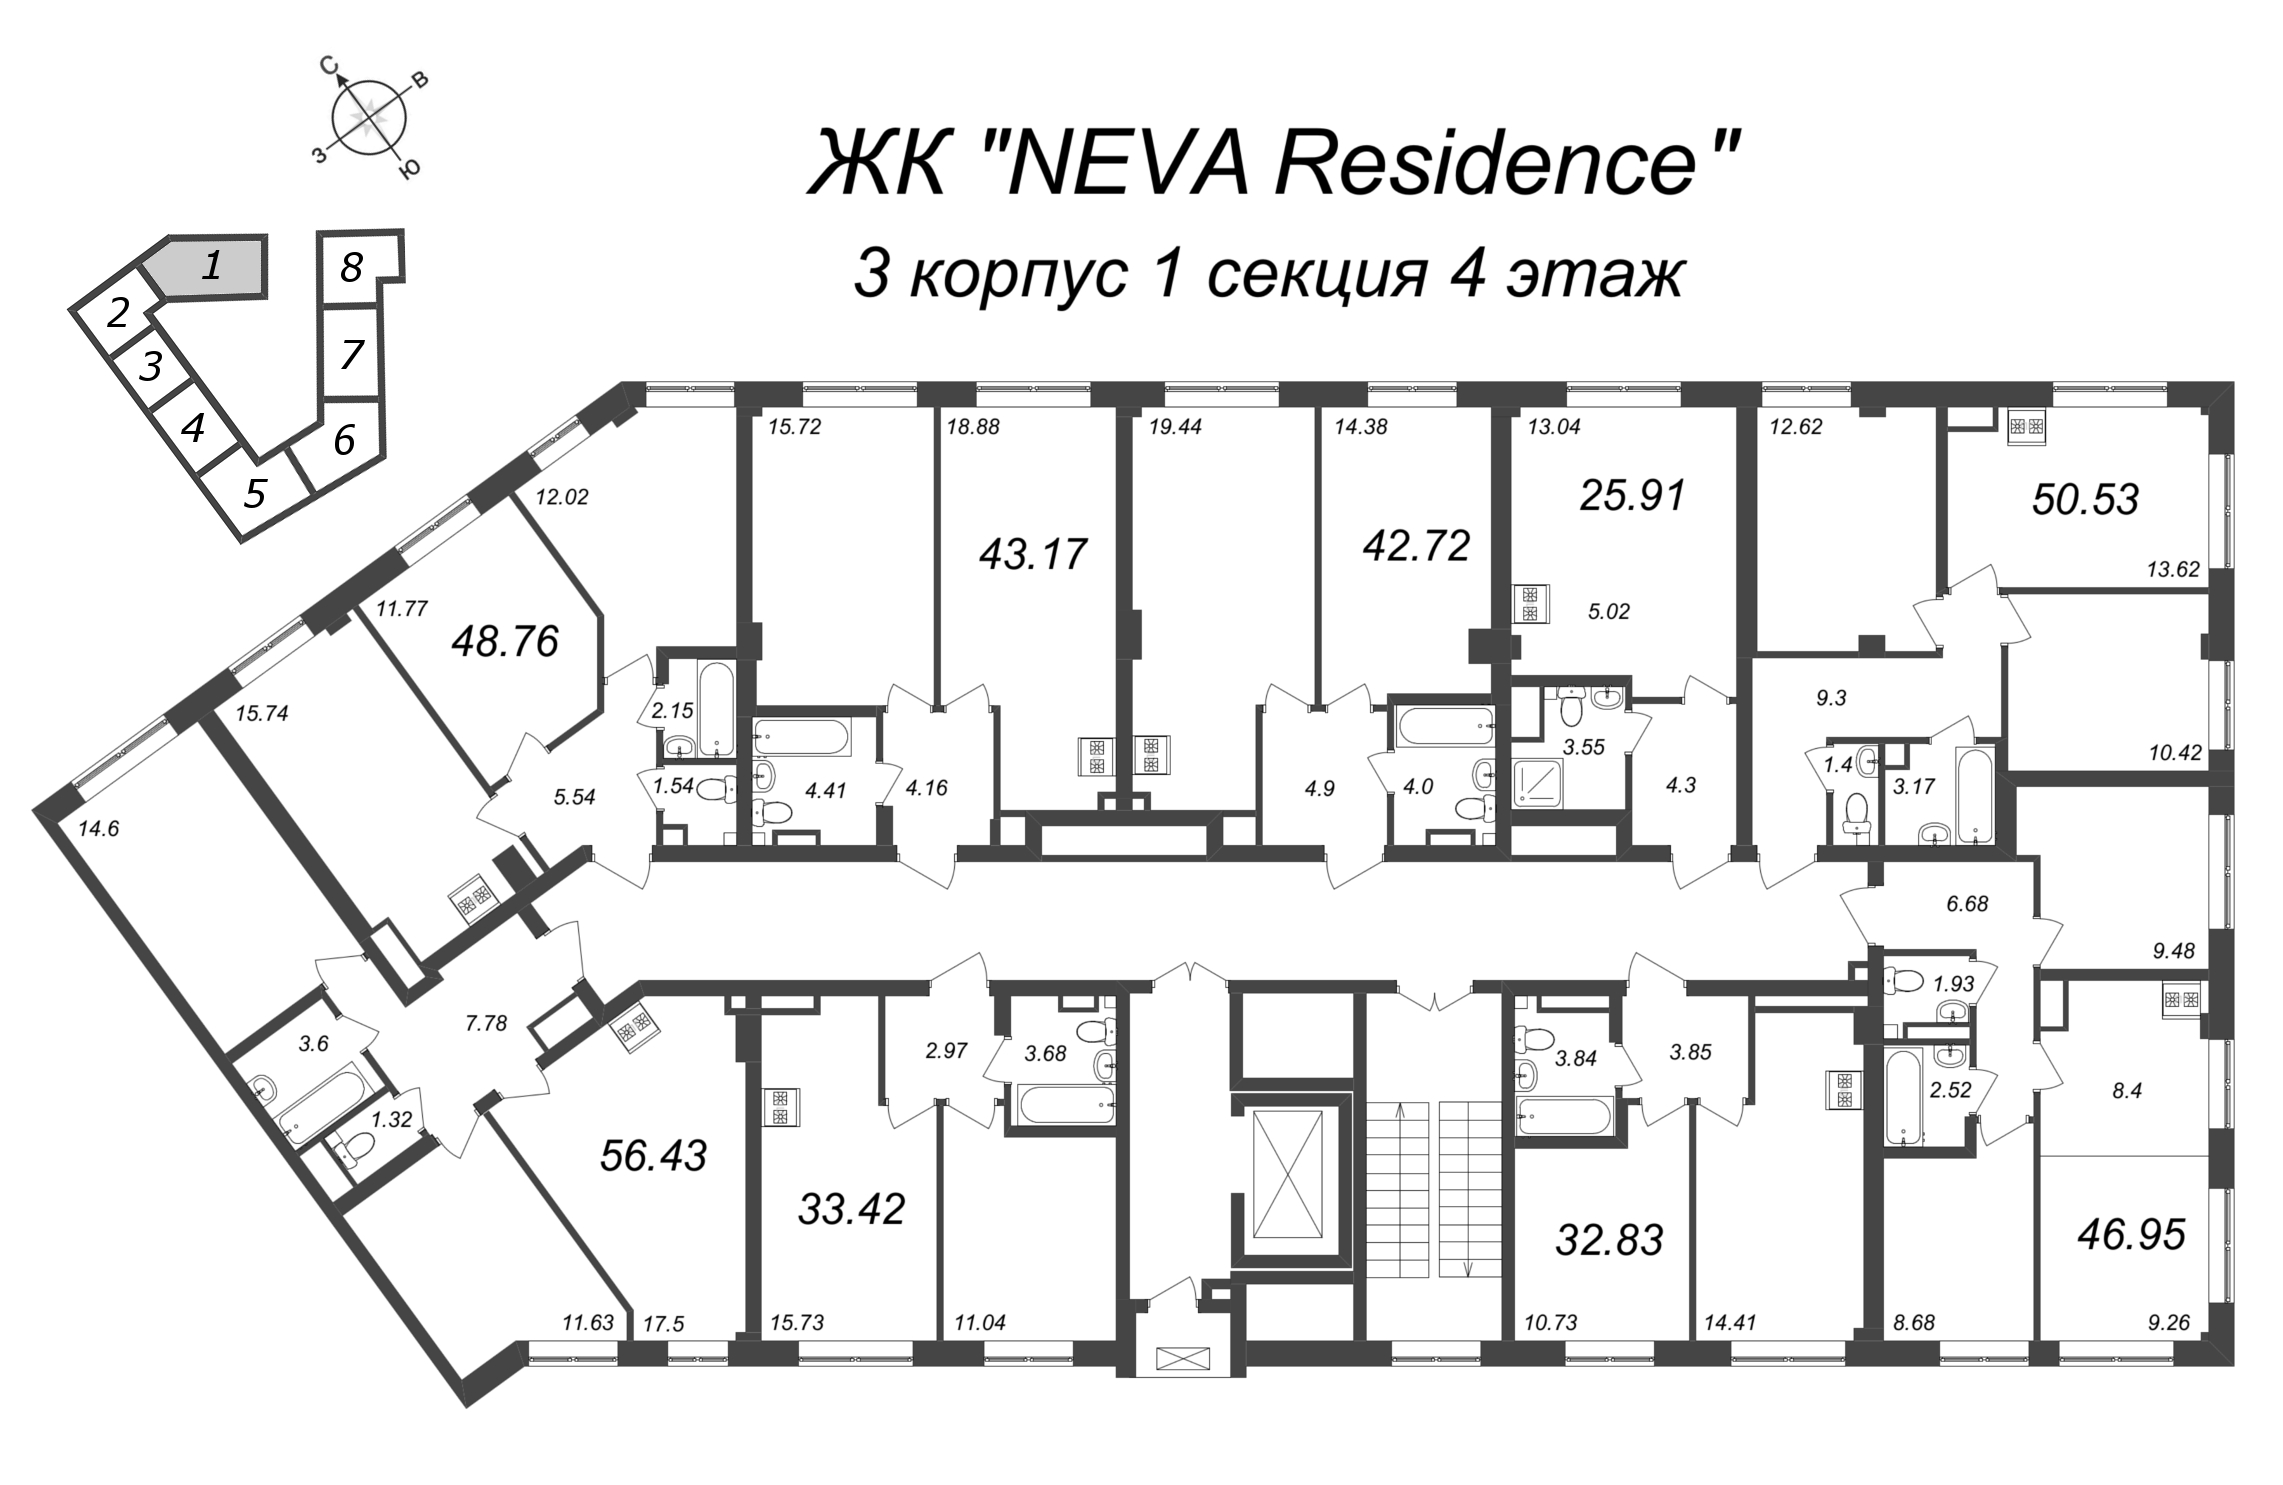 2-комнатная (Евро) квартира, 42.72 м² - планировка этажа